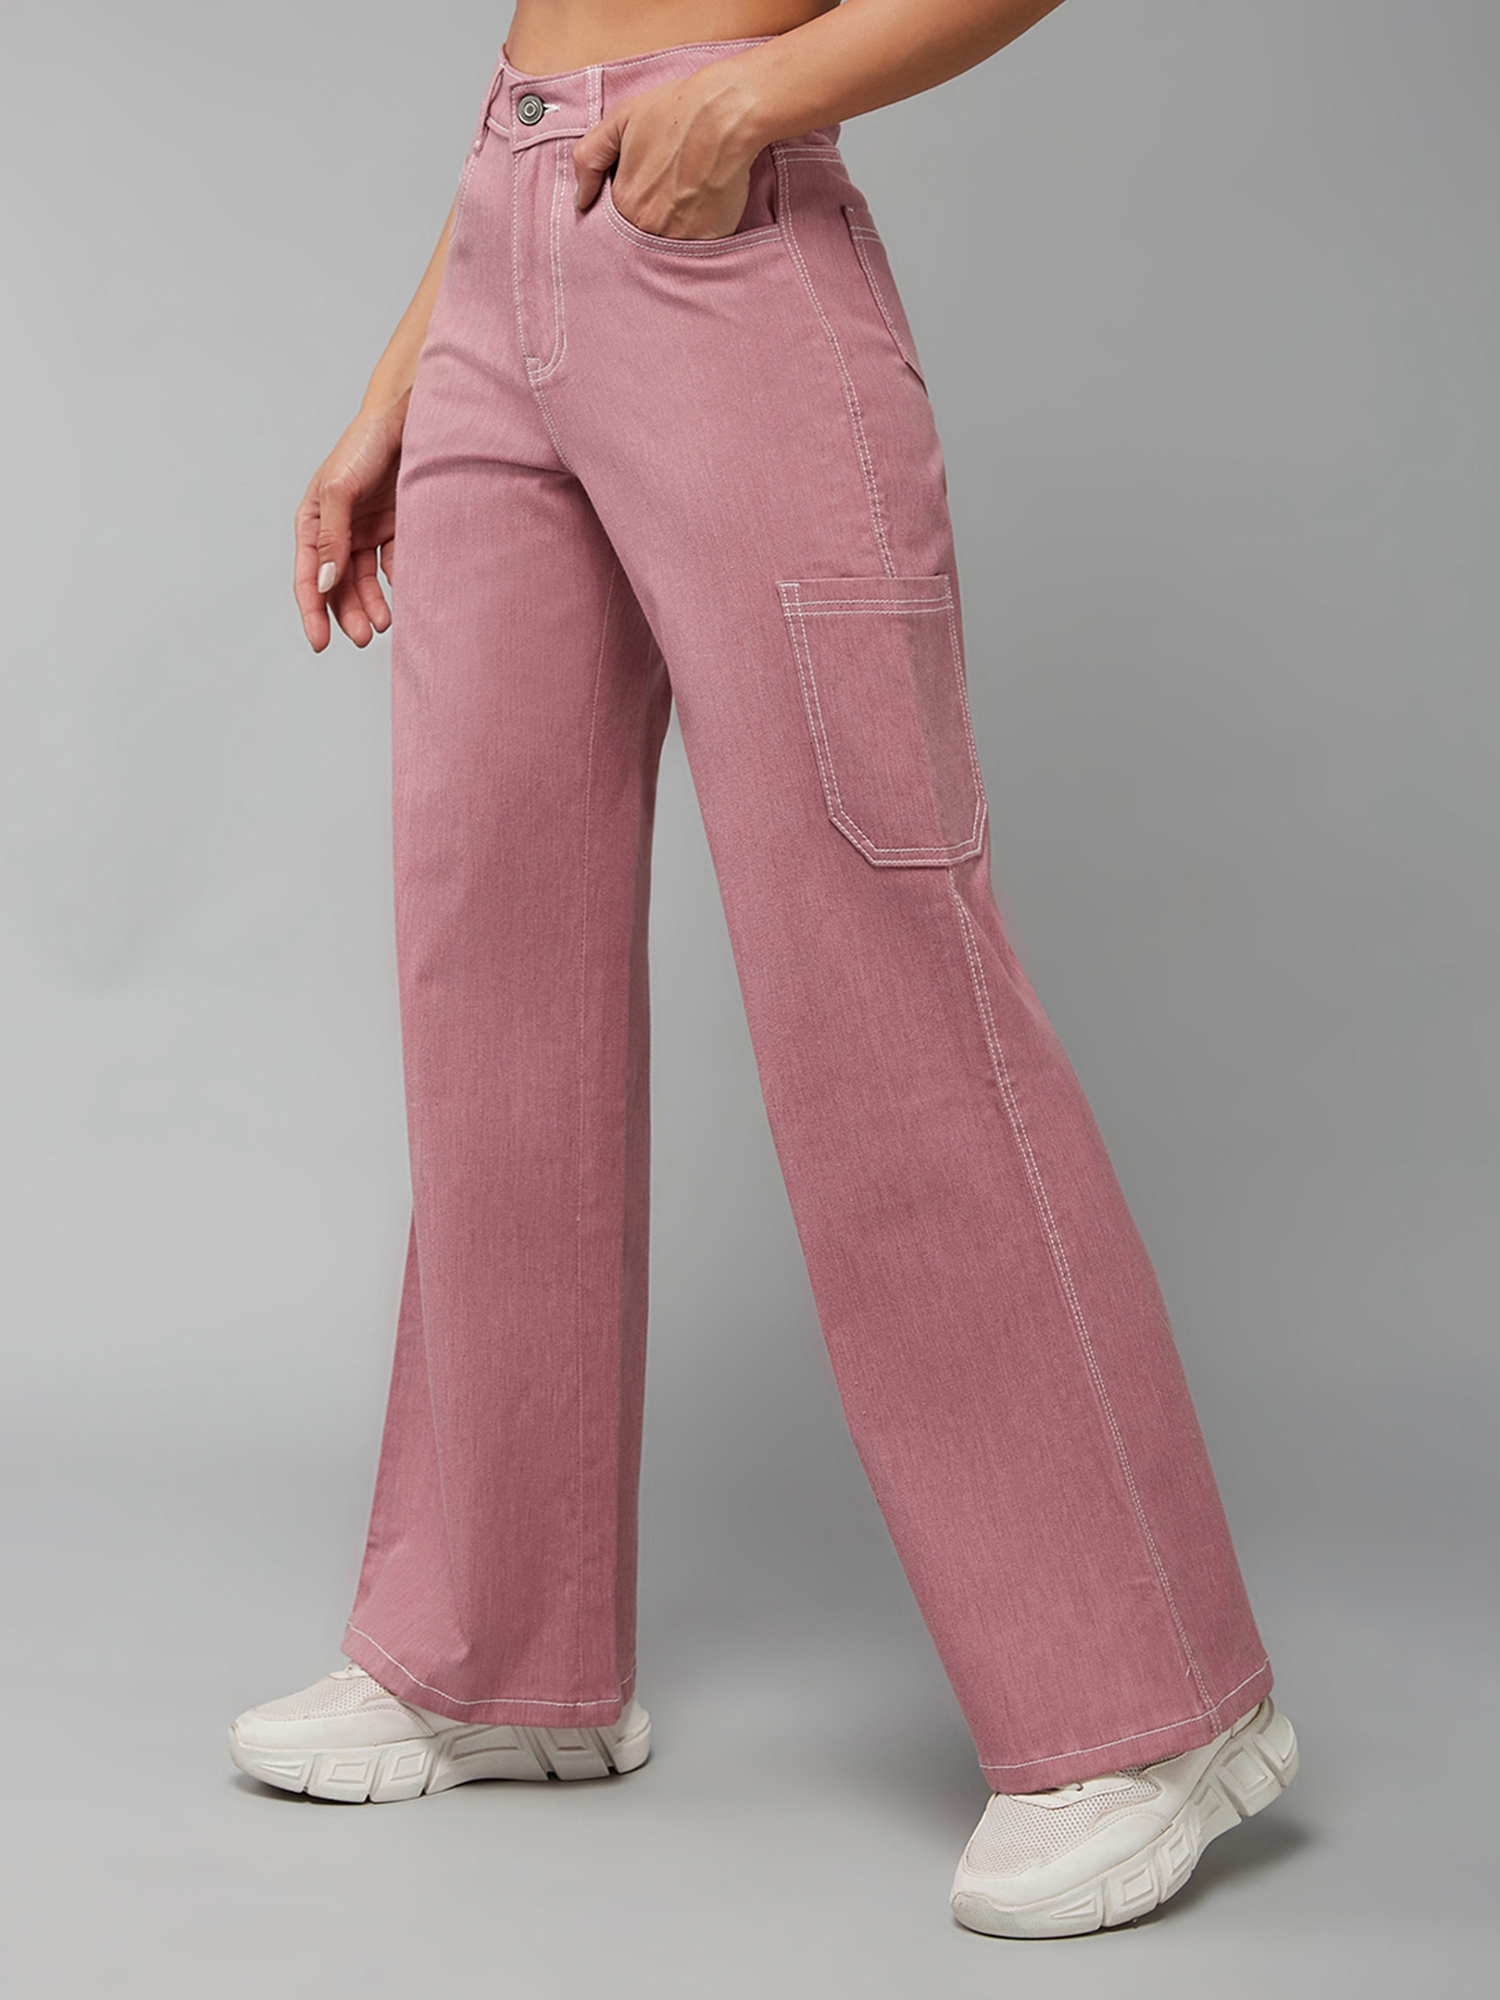 https://cdn.fynd.com/v2/falling-surf-7c8bb8/fyprod/wrkr/products/pictures/item/free/original/5oQXlX_dx-Womens-Dusty-Pink-Wide-Leg-High-Rise-Clean-Look-Regular-Length-Stretchable-Denim-Pants.jpeg